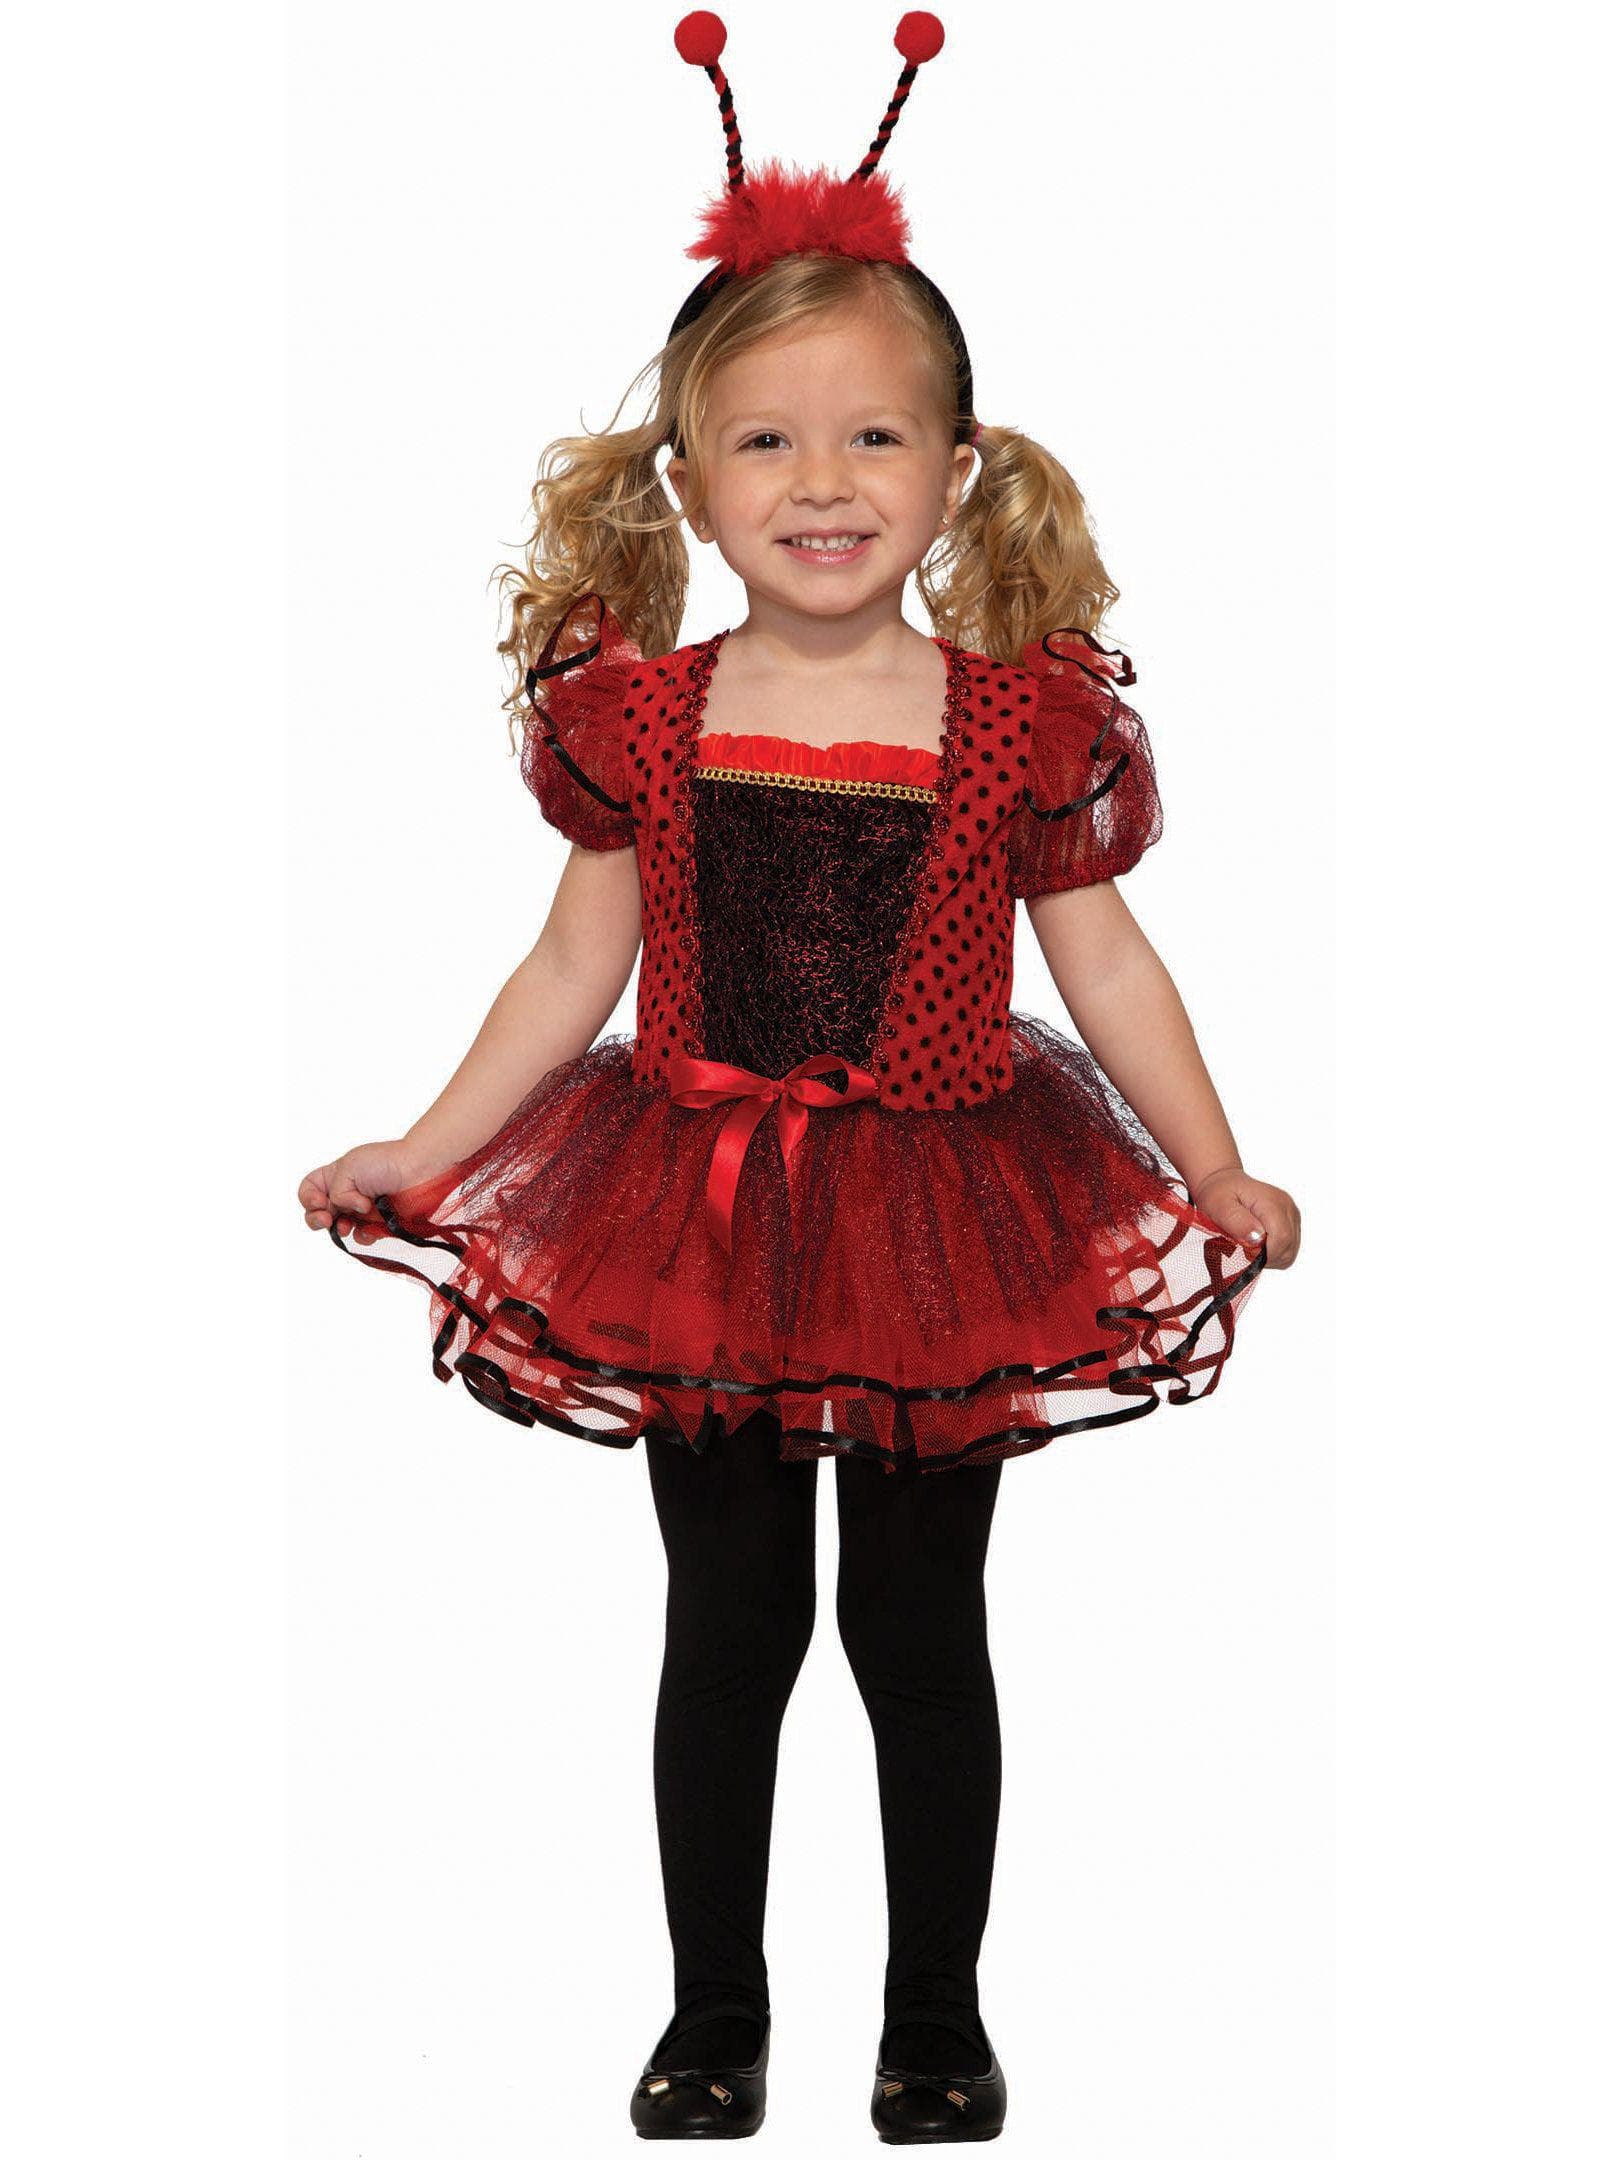 Kid's Little Lady Bug Costume - costumes.com